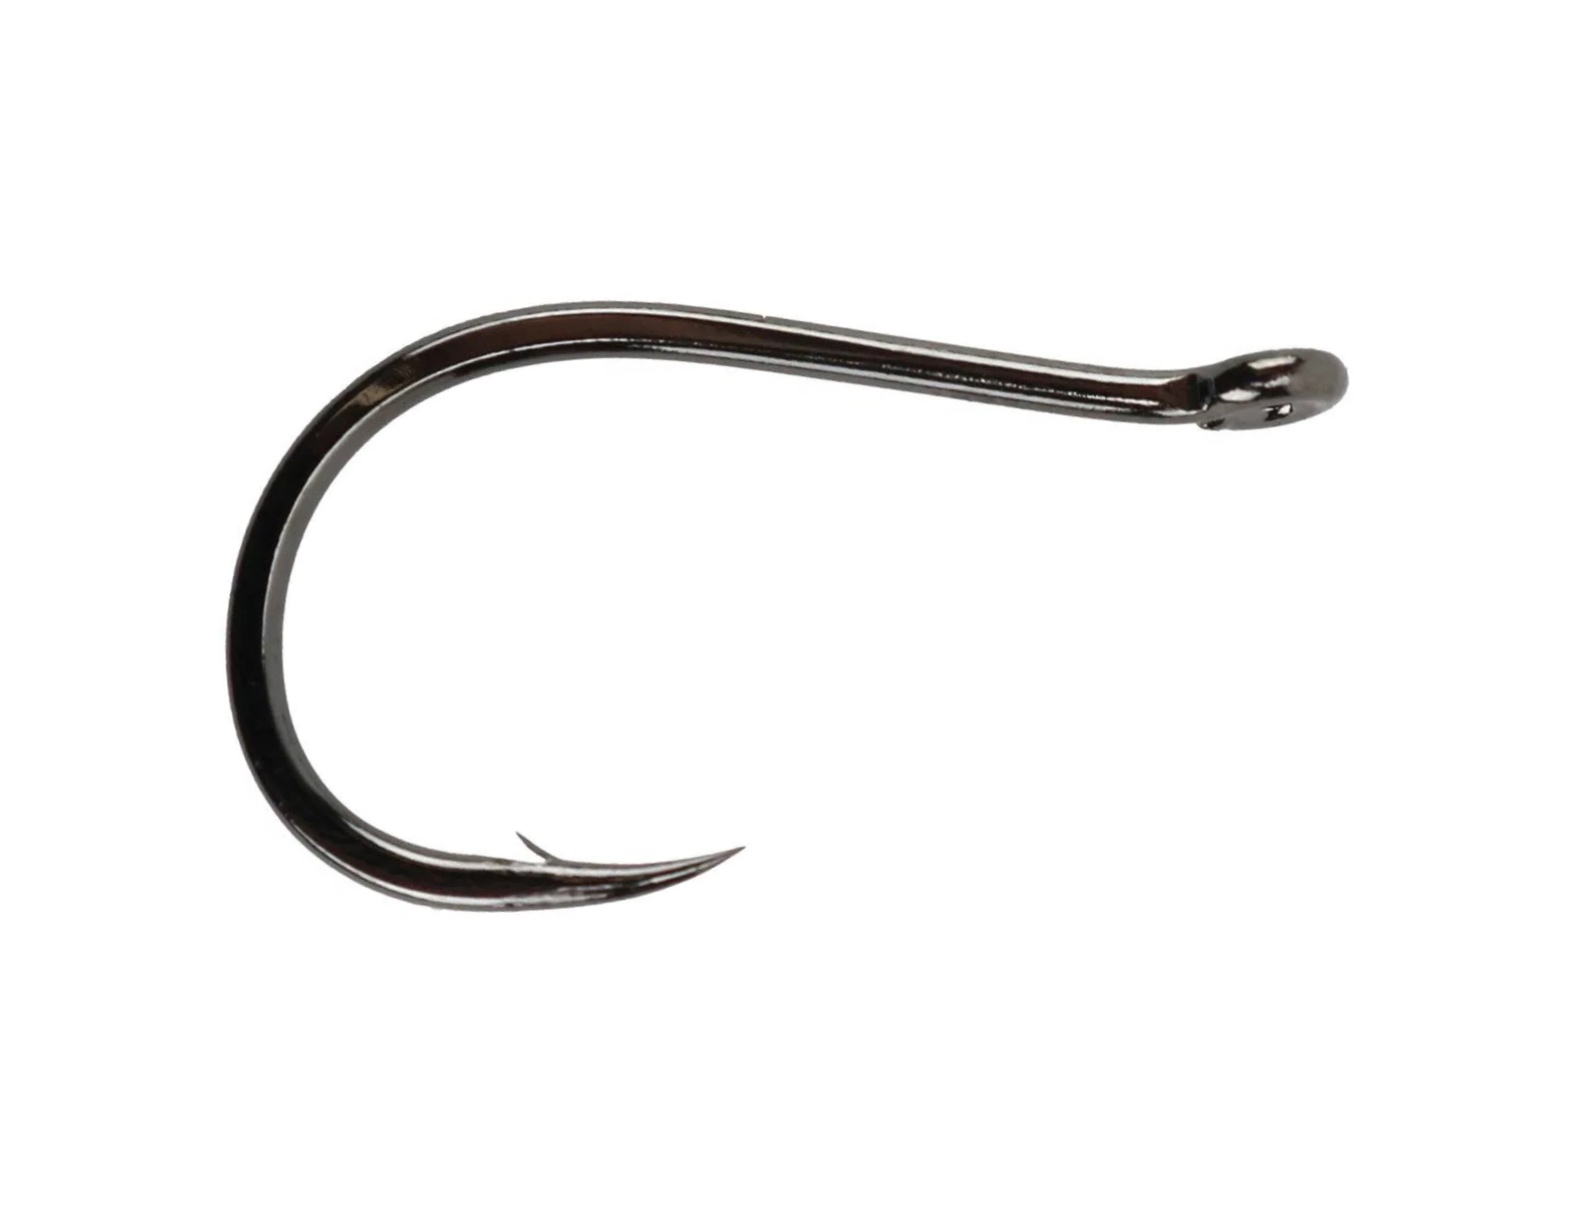 DAIICHI 2441 HOOK - Traditional Salmon & Steelhead Fly Tying Hooks